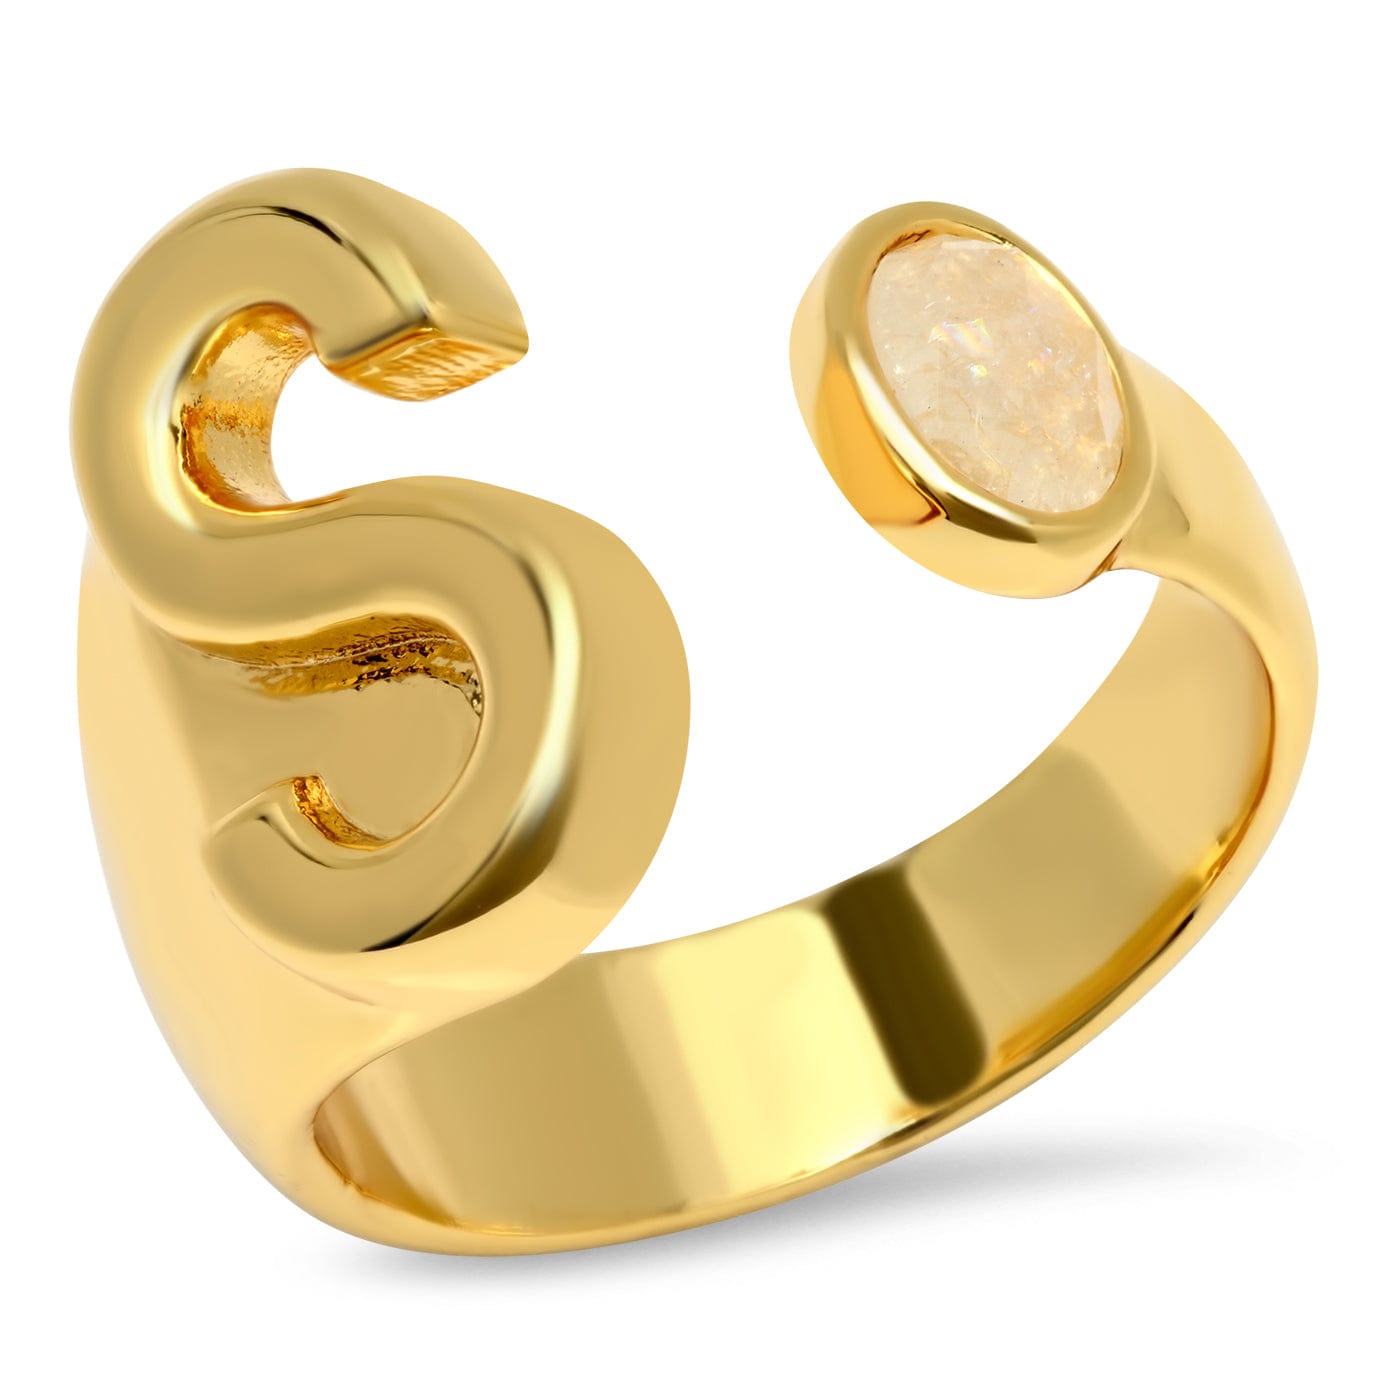 TAI JEWELRY Rings S Initial Wrap Ring